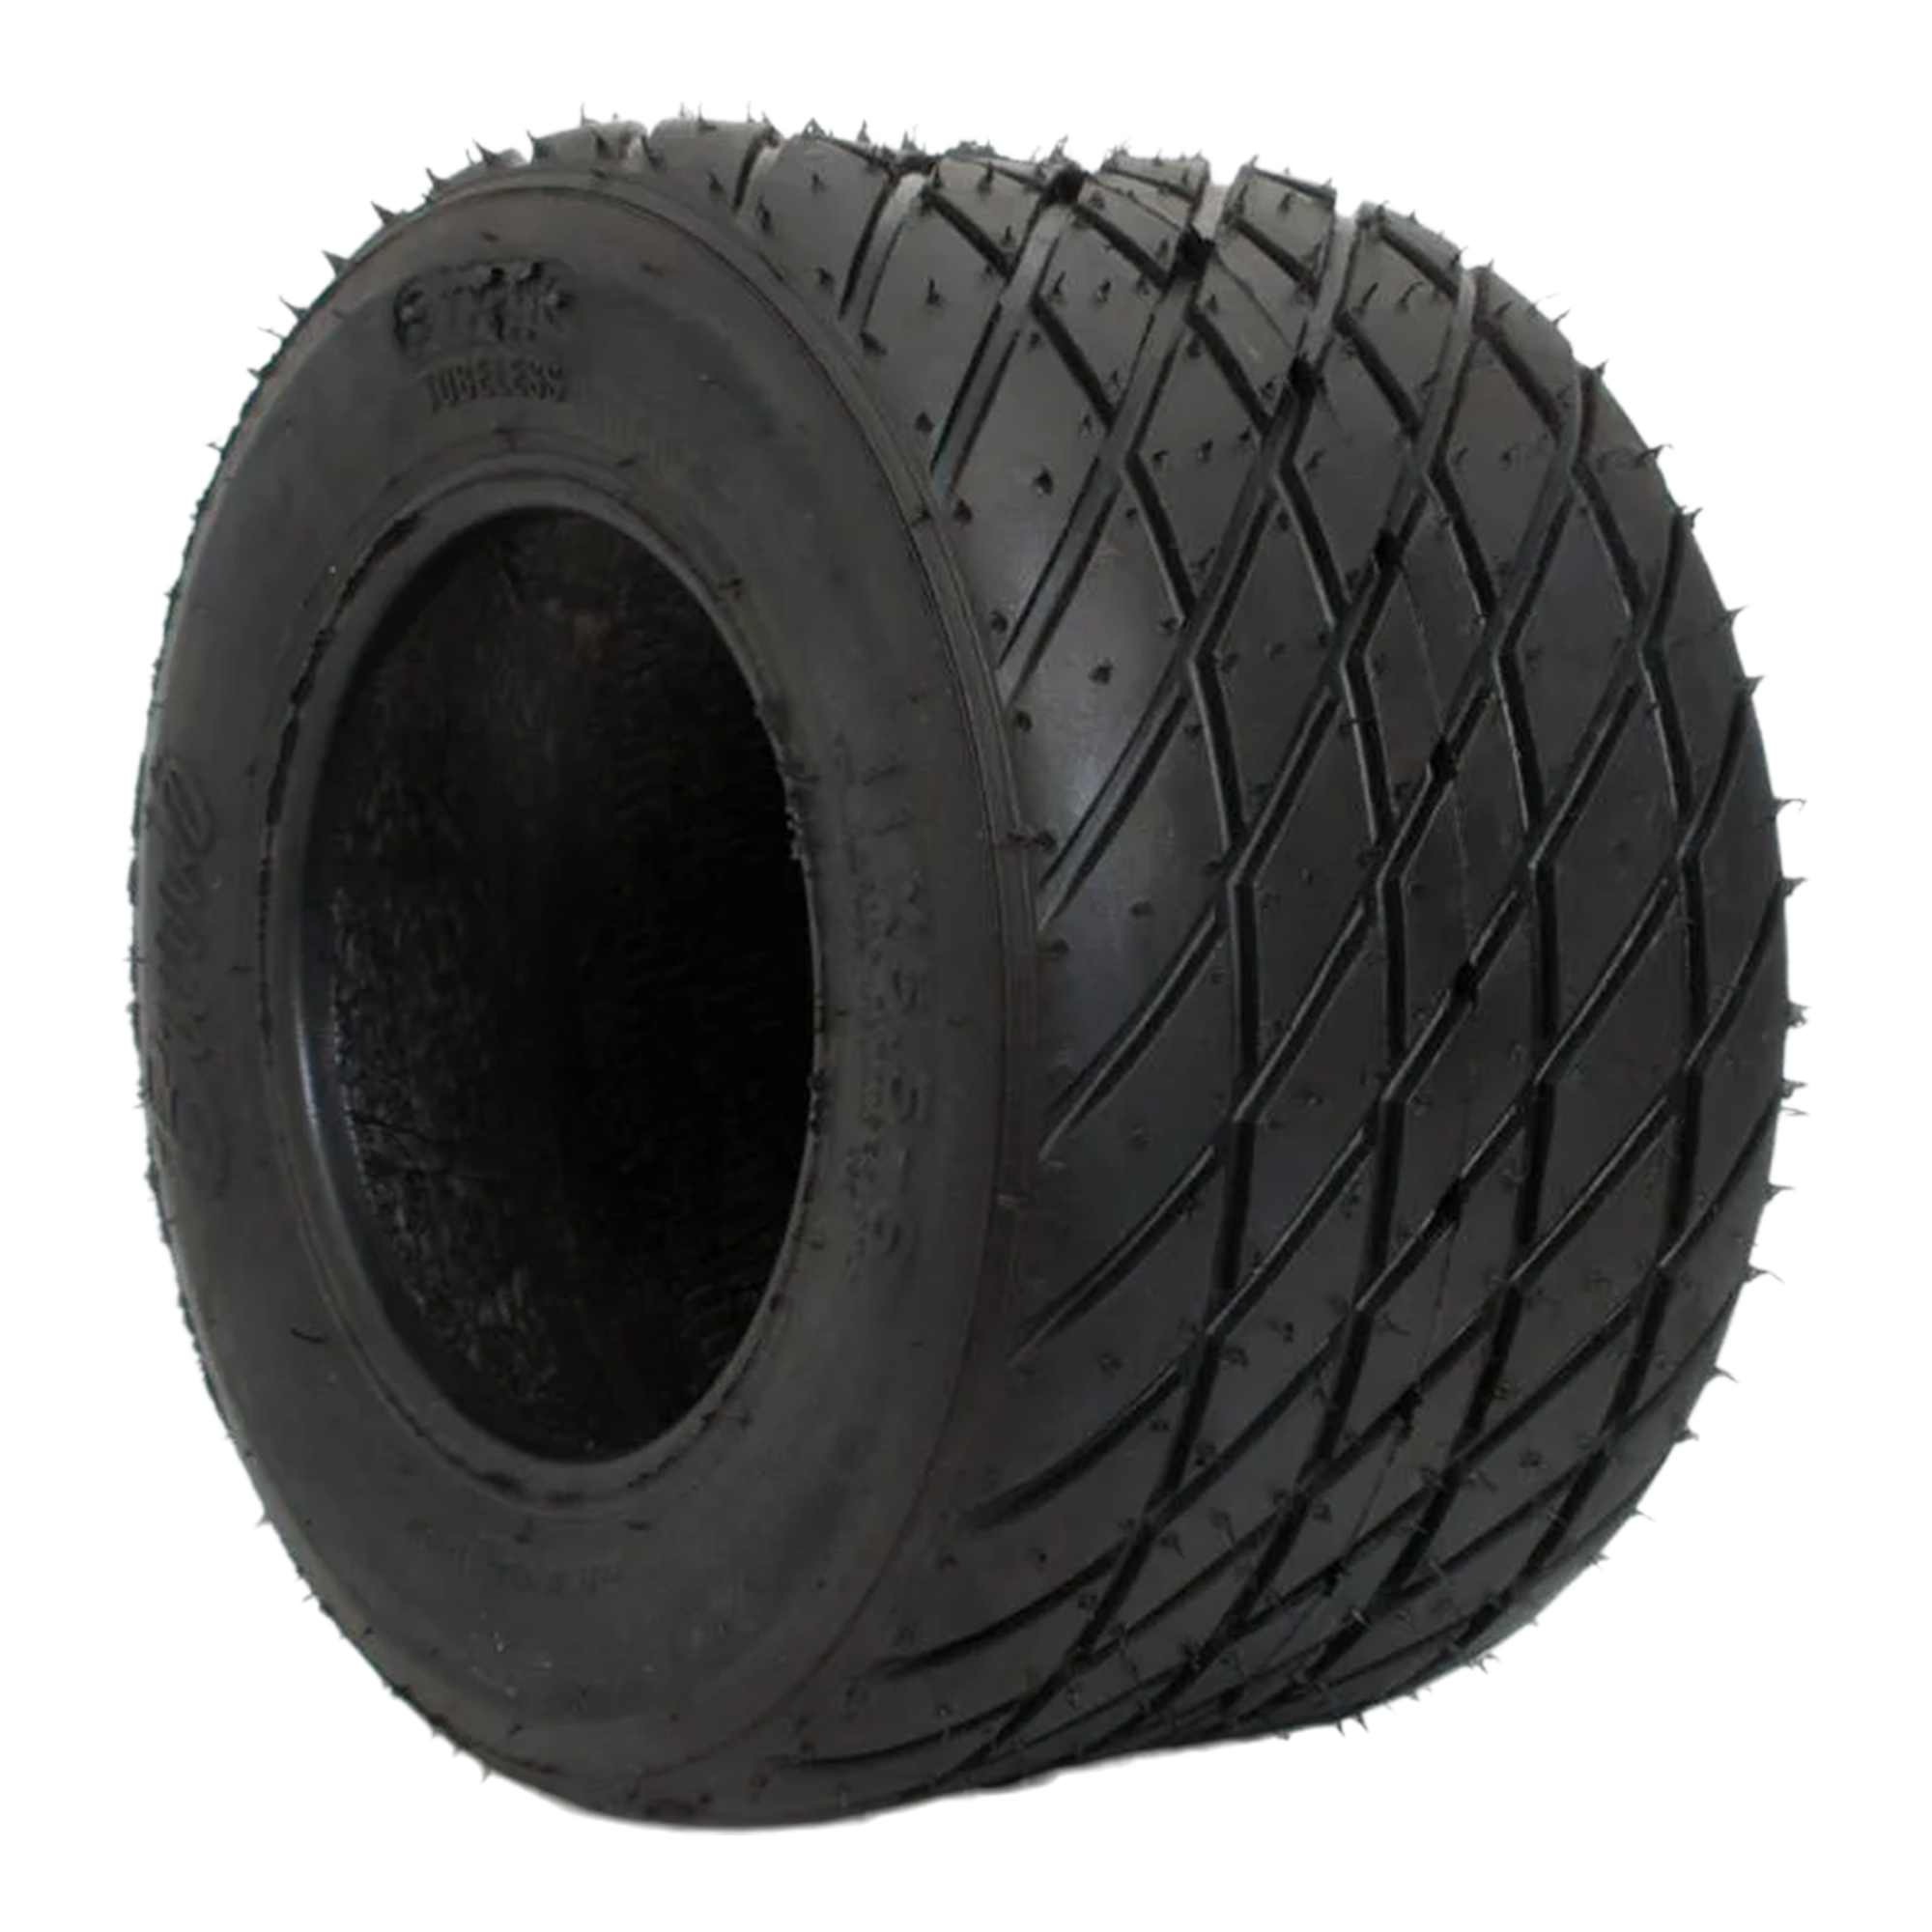 Burris Grooved Dirt Tires